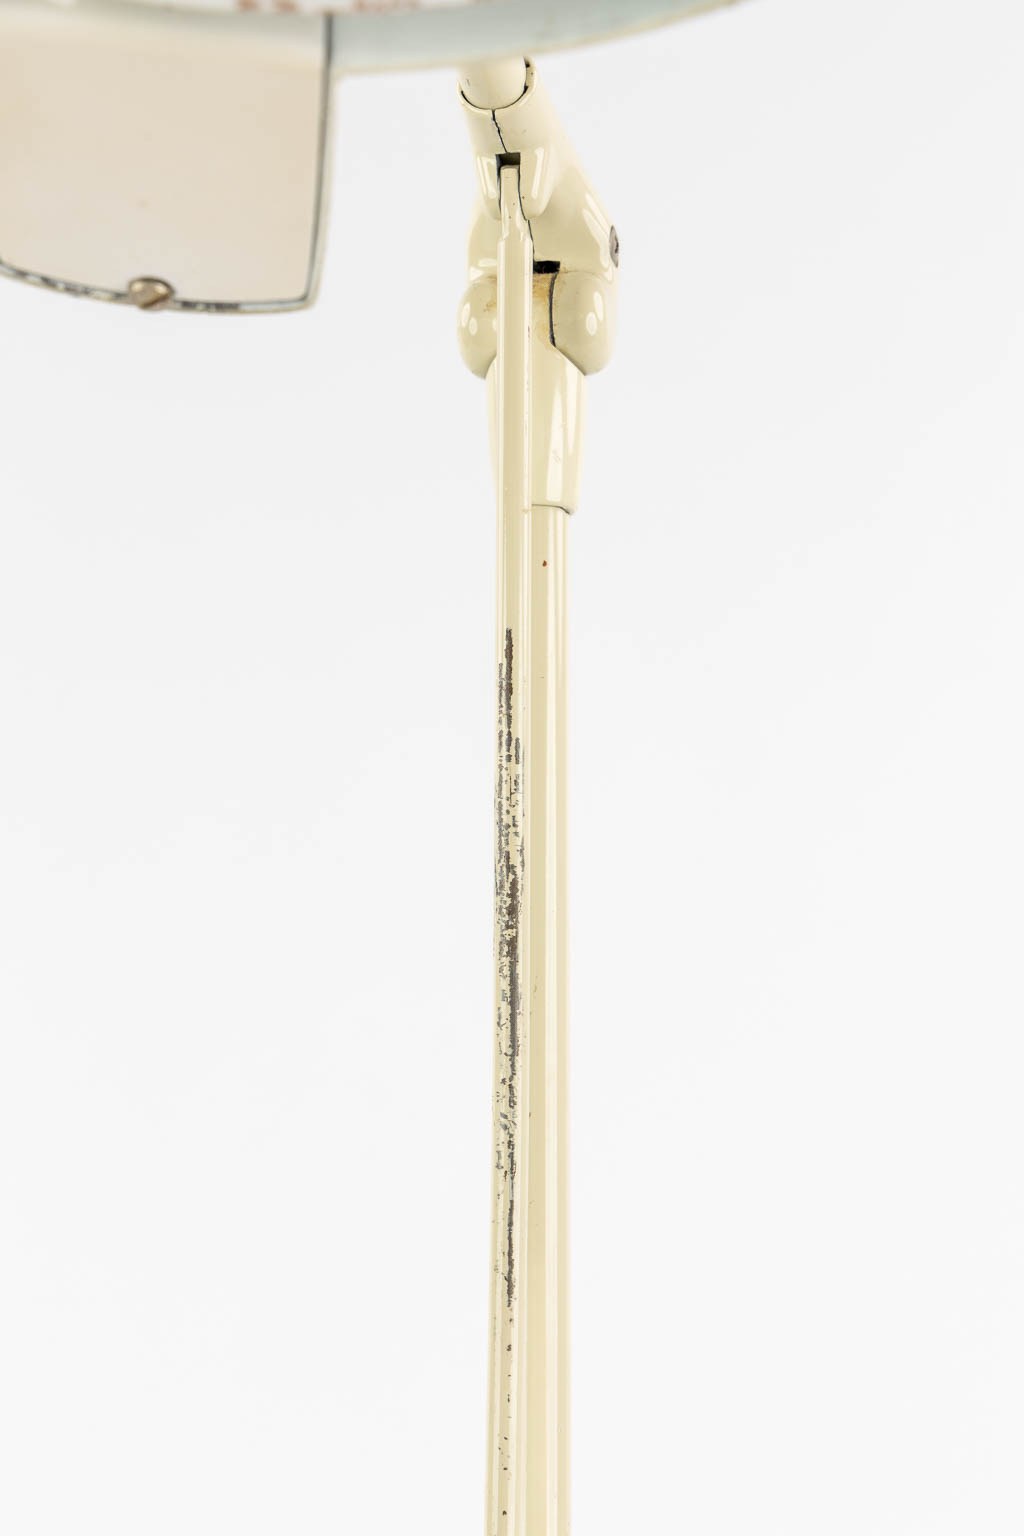 Dazor, M-1470, a mid-century reading/table lamp. (L:18 x W:26 x H:54 cm)